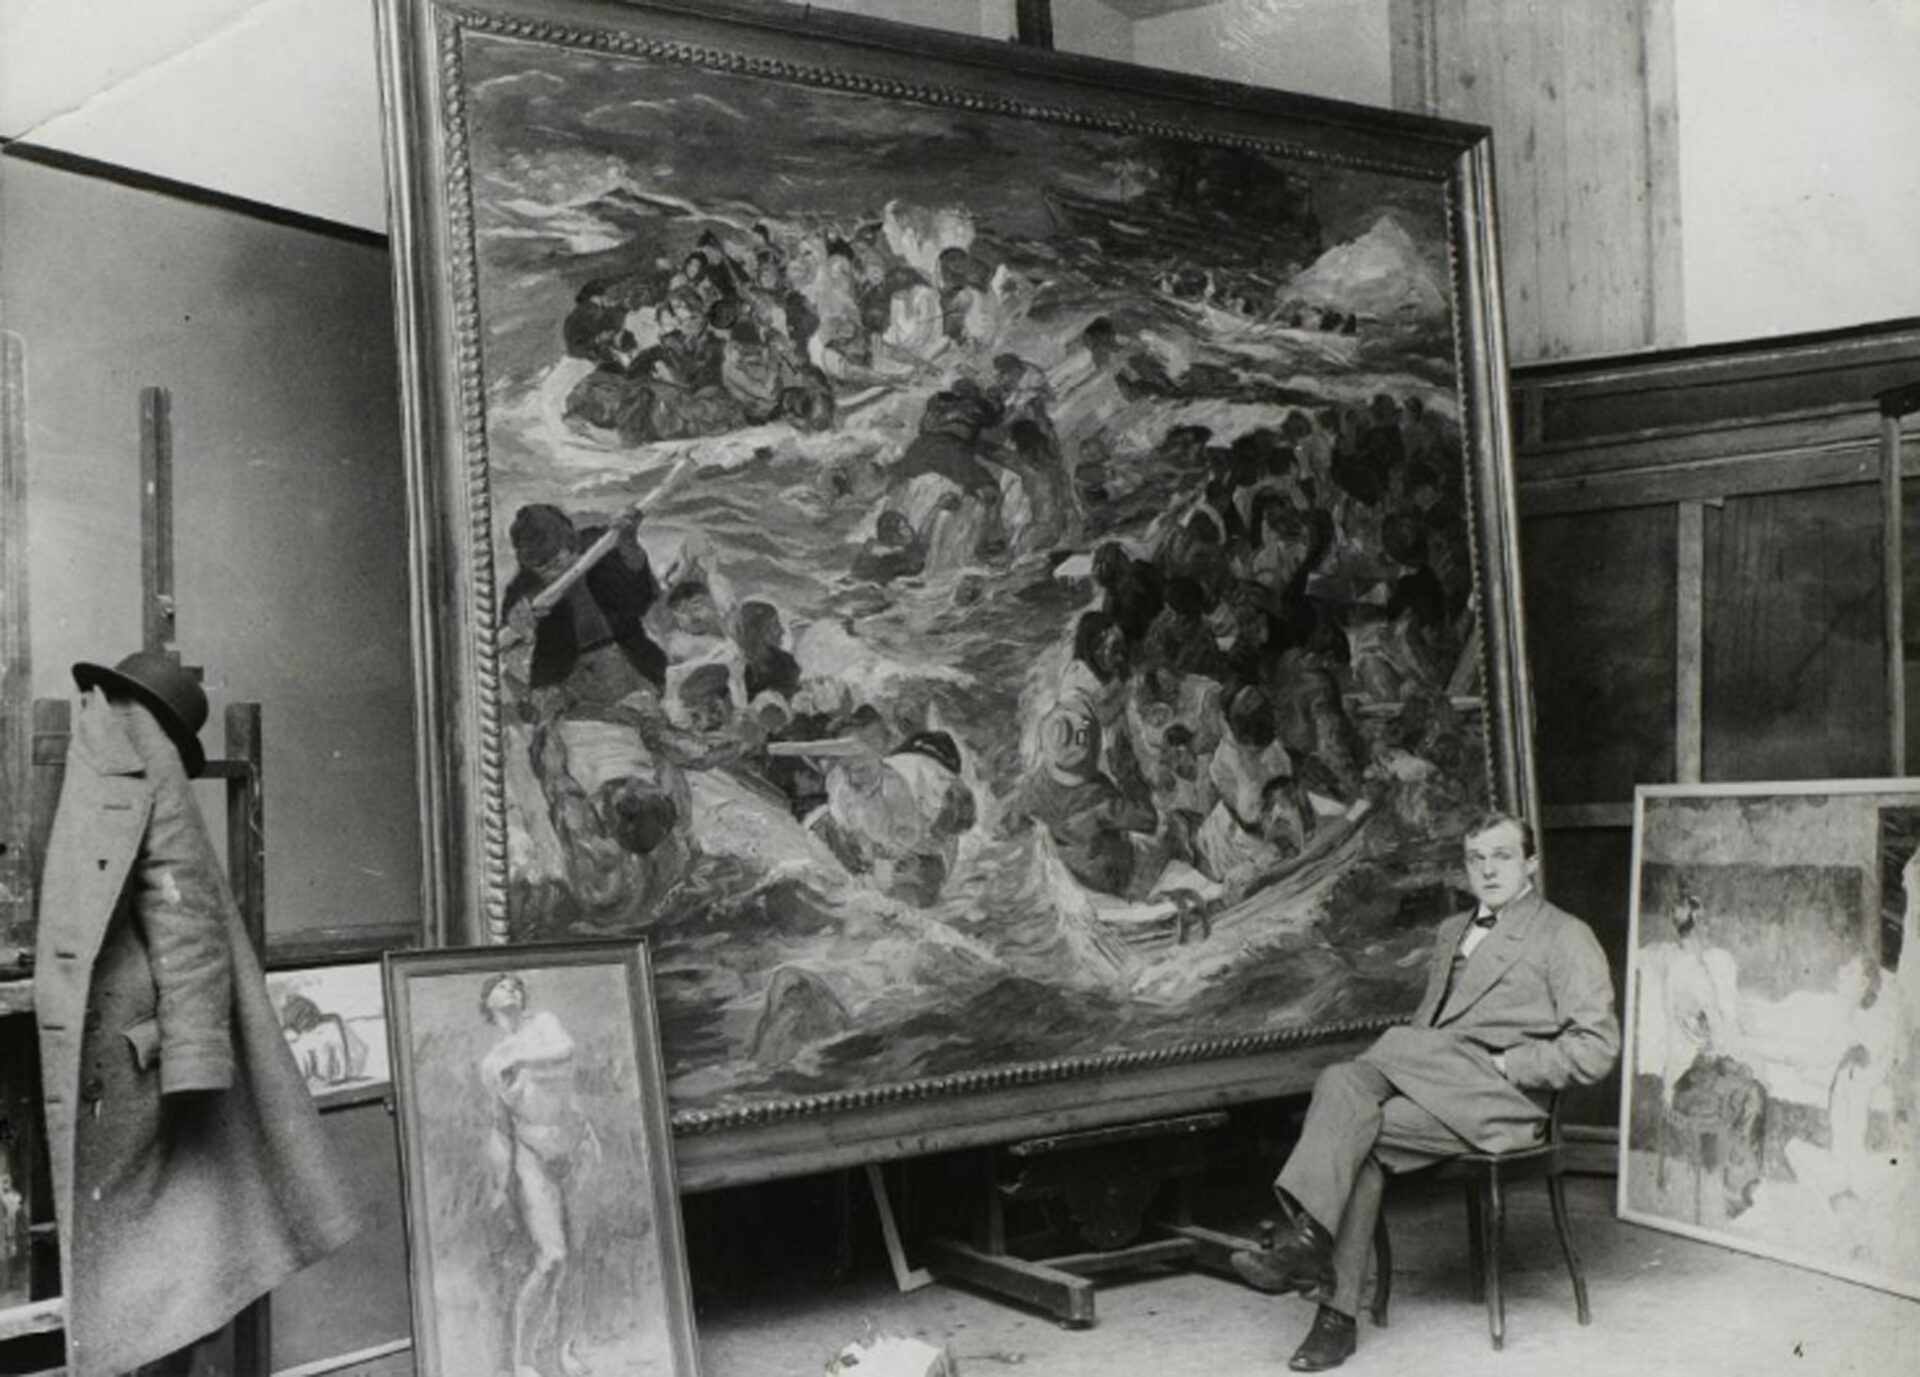 Oliver Baker, Max Beckmann in seinem Atelier vor dem Gemälde, Untergang der Titanic, 1912, Fotografie, Germanisches Nationalmuseum Nürnberg